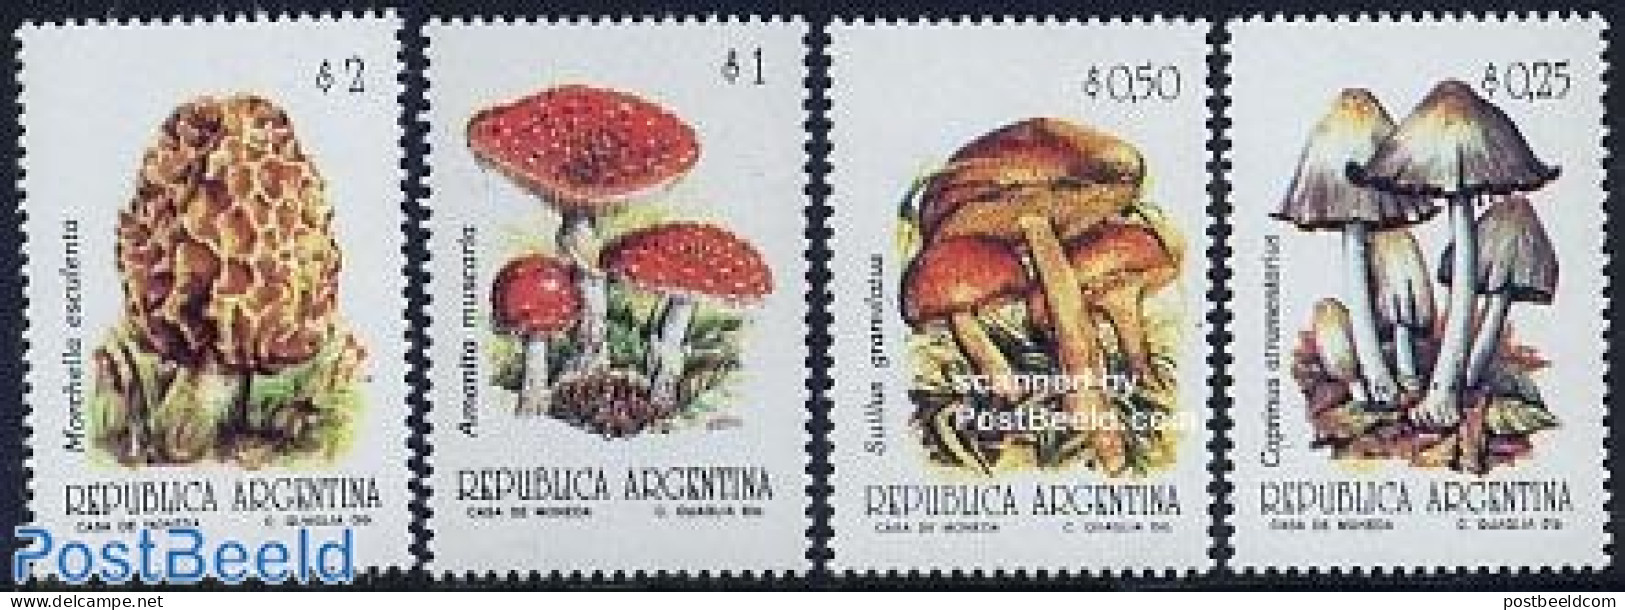 Argentina 1993 Definitives, Mushrooms 4v, Mint NH, Nature - Mushrooms - Neufs